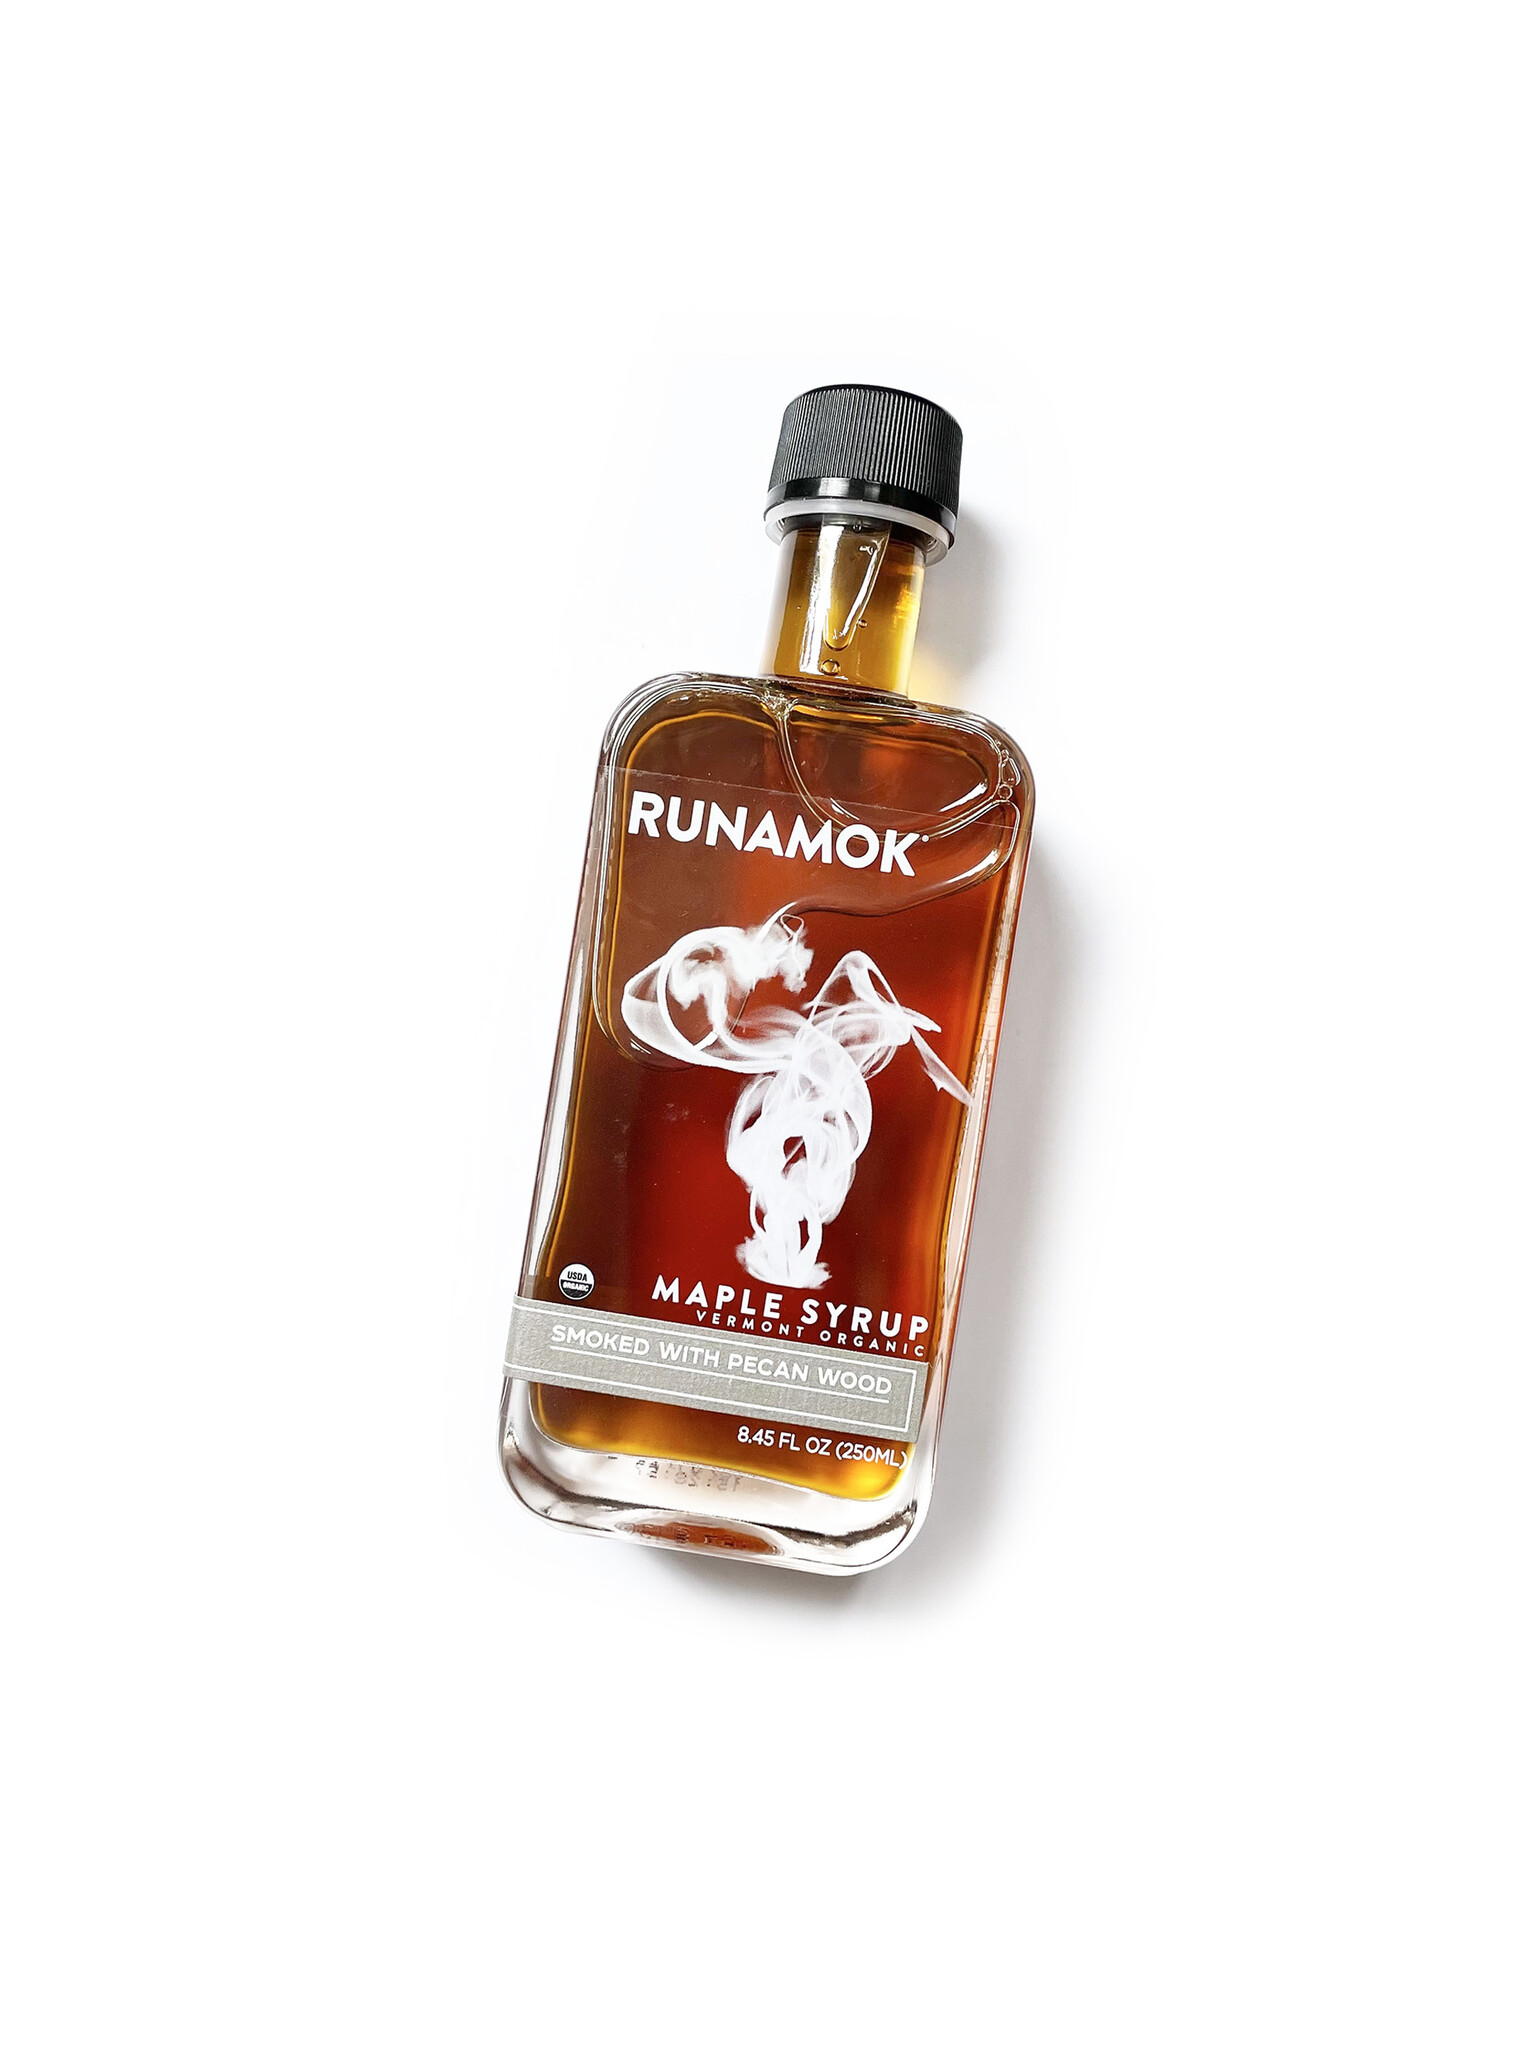 Smoked Maple Syrup - Runamok